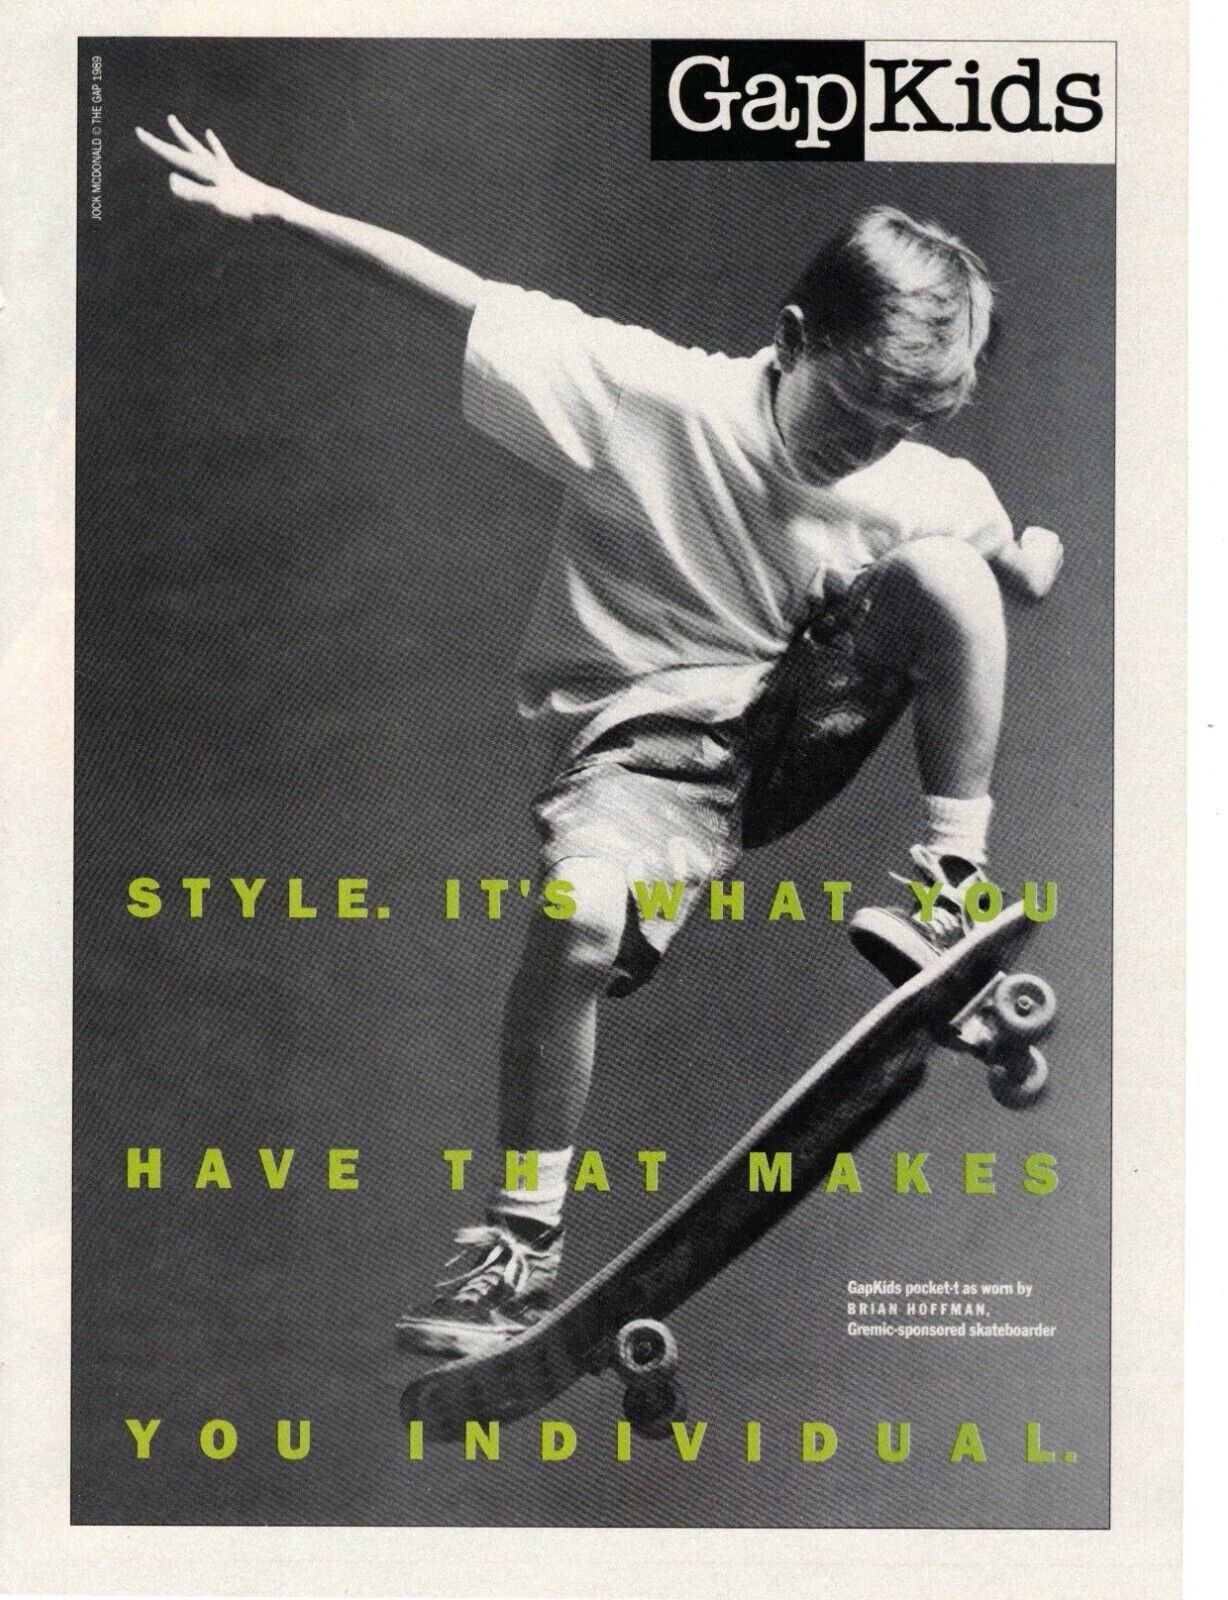 Vtg Print Ad 1980s 1989 Gap Kids Skater Skateboard Boy Style Brian Hoffman